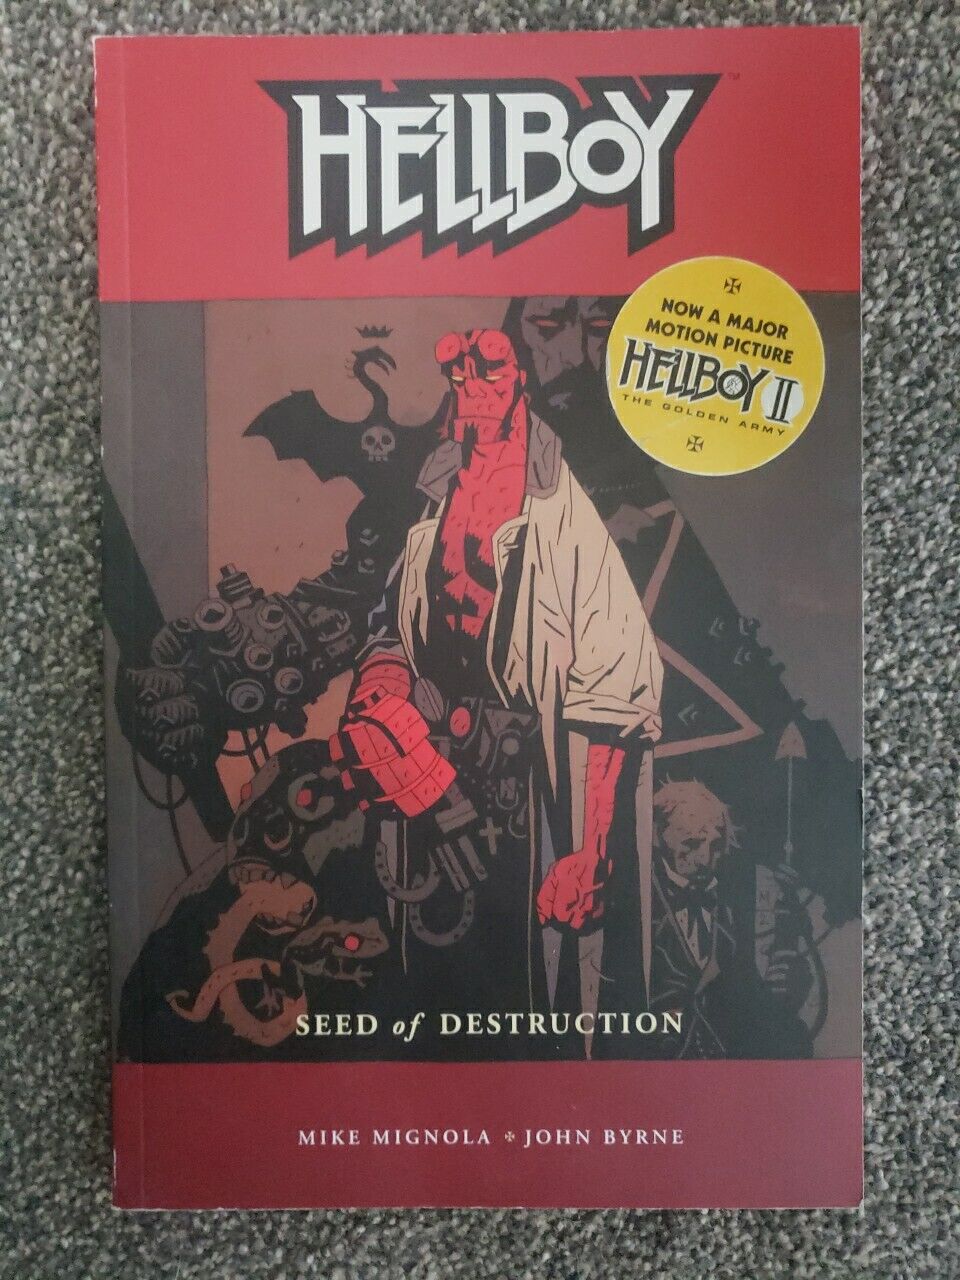 Hellboy #1 (Dark Horse Comics November 2003)